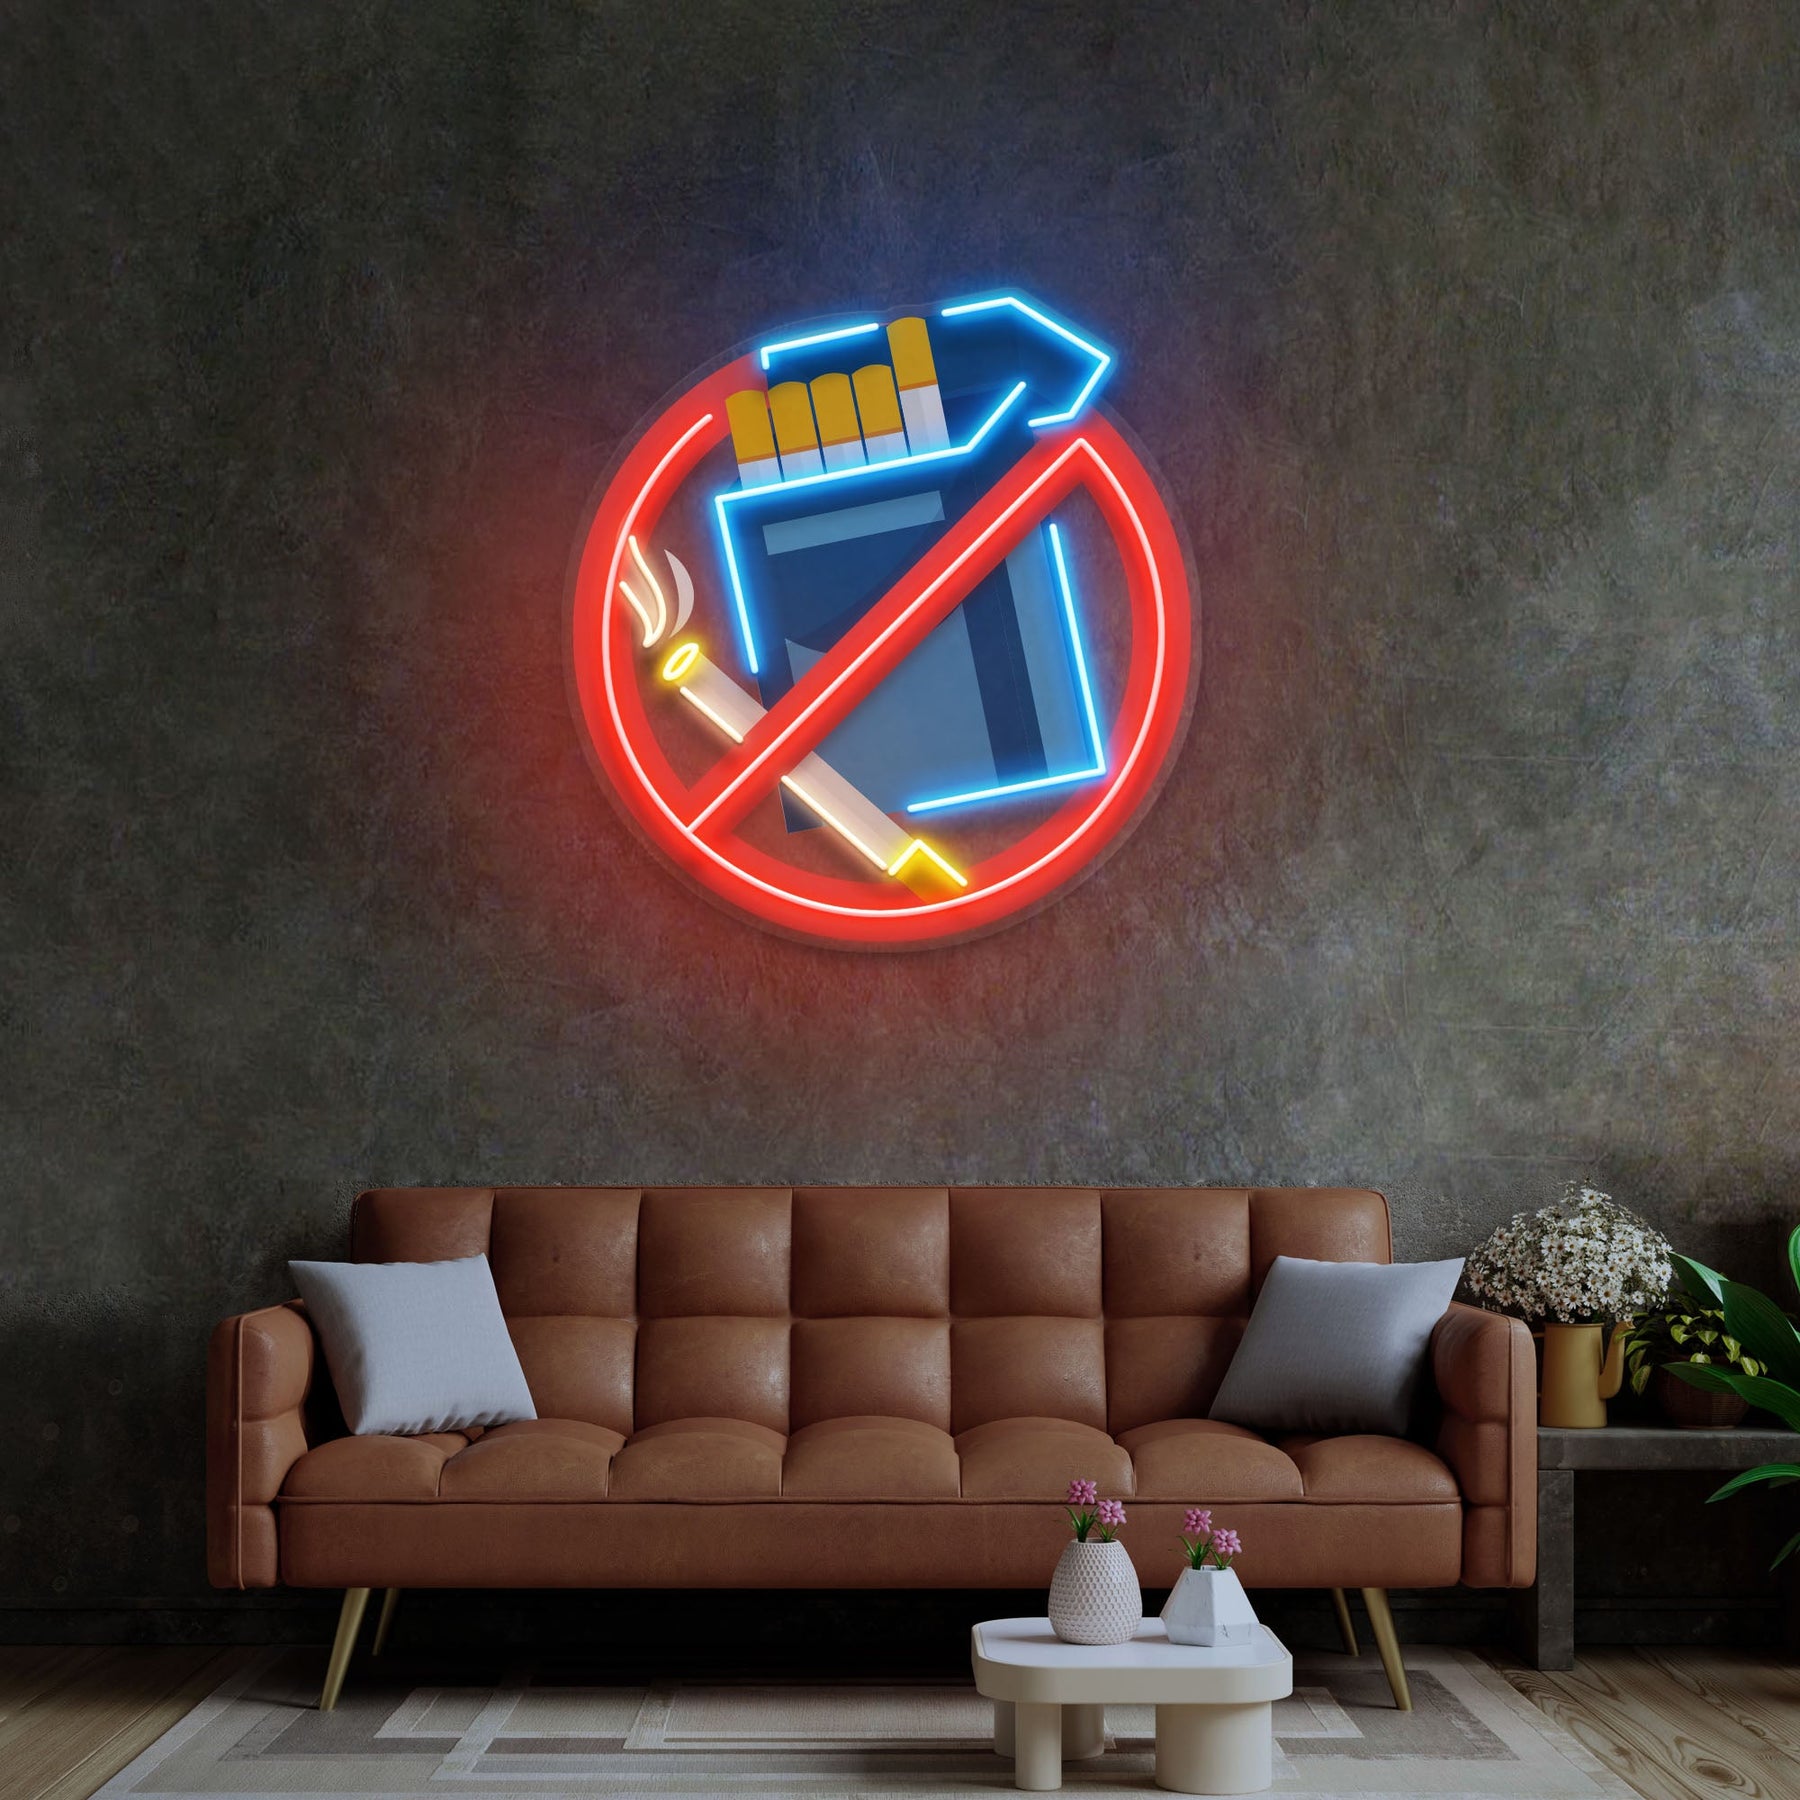 No Smoke LED Neon Sign Light Pop Art